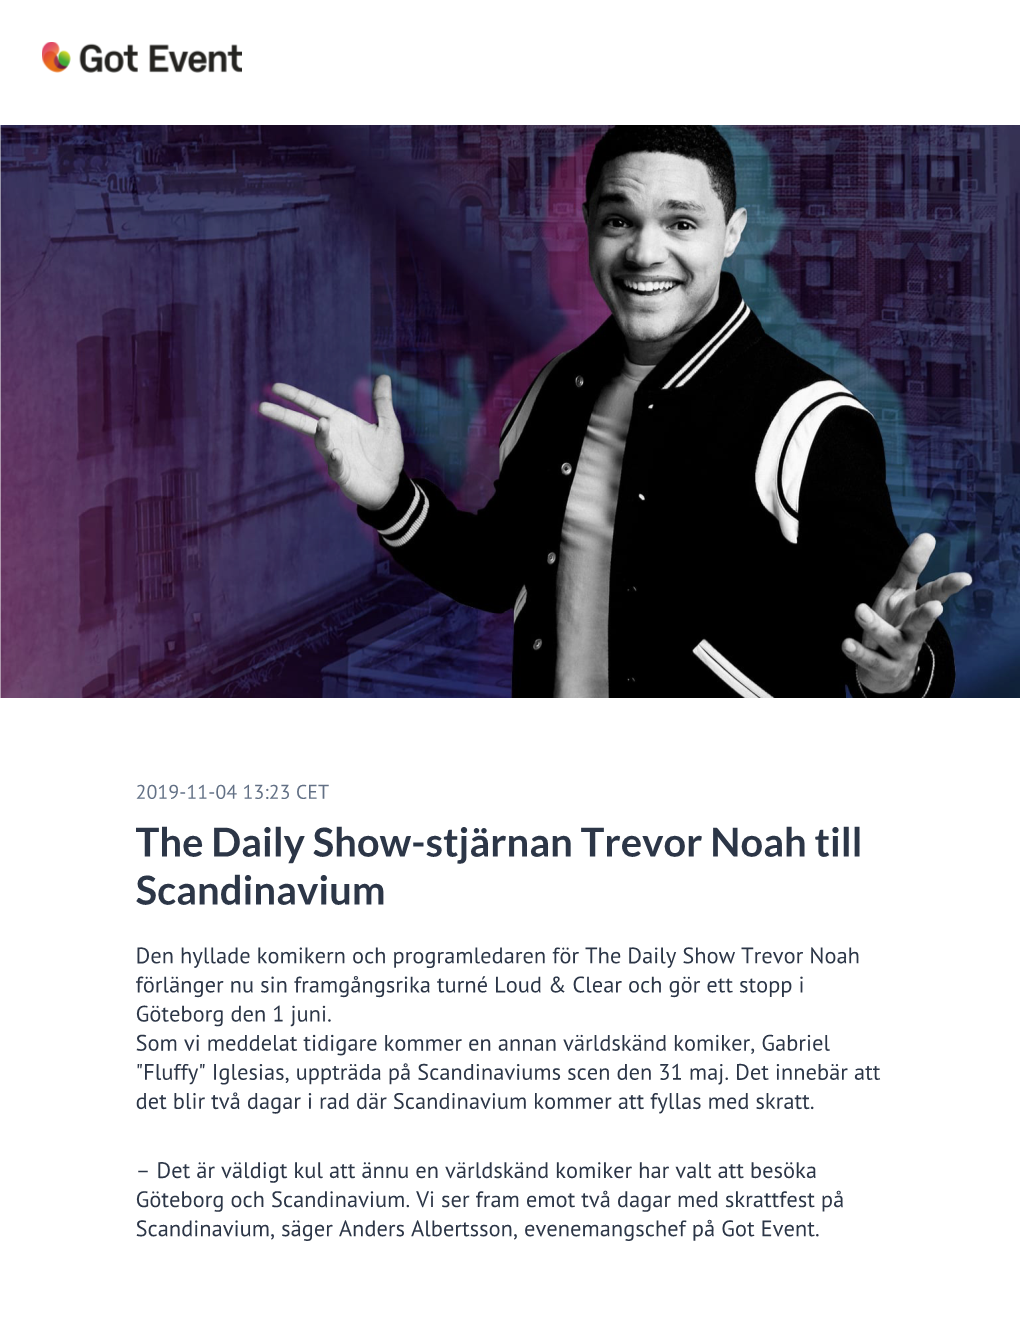 The Daily Show-Stjärnan Trevor Noah Till Scandinavium